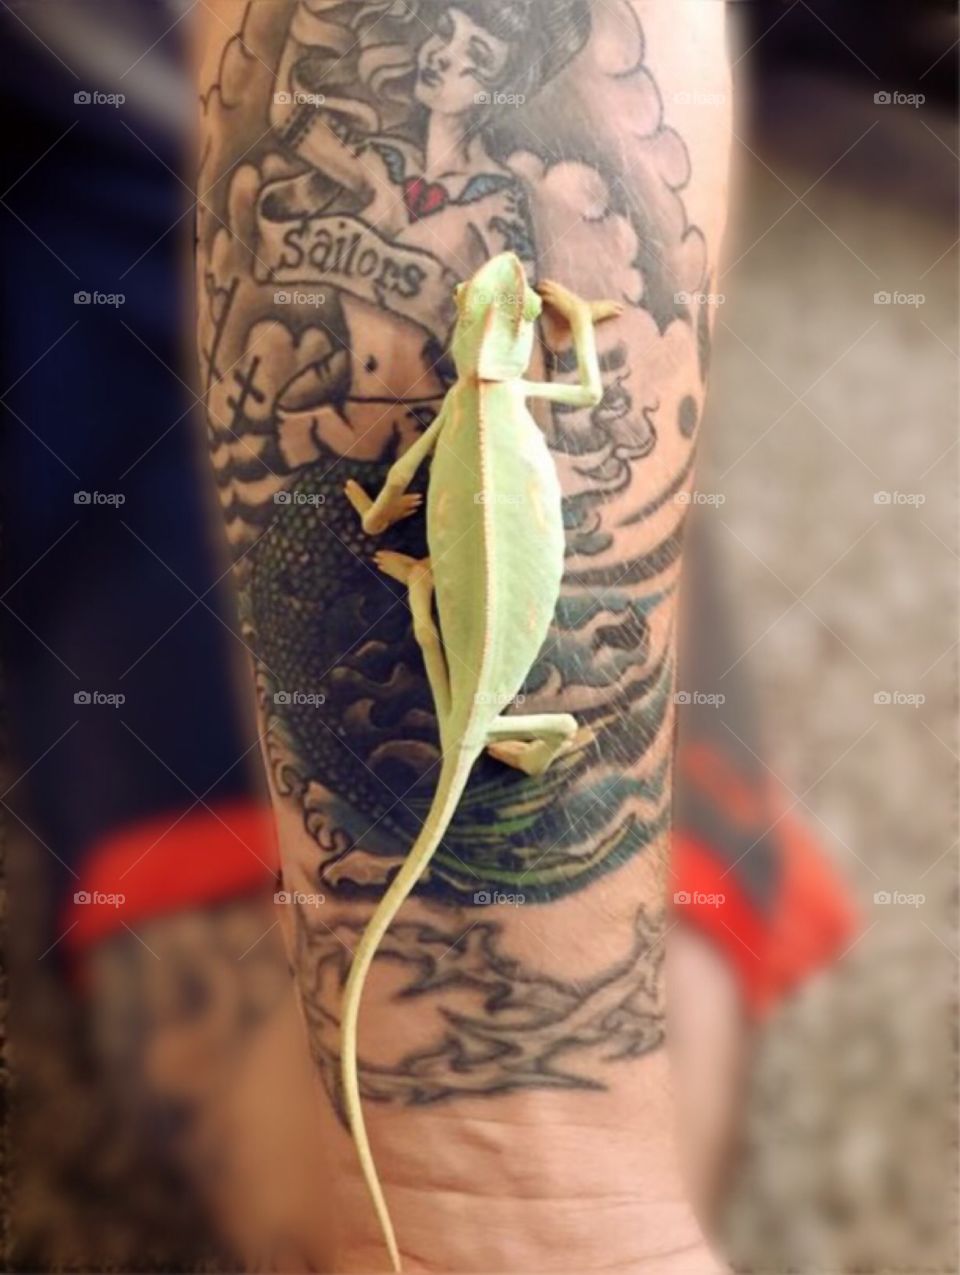 Chameleon exploring the mermaid tattoo 